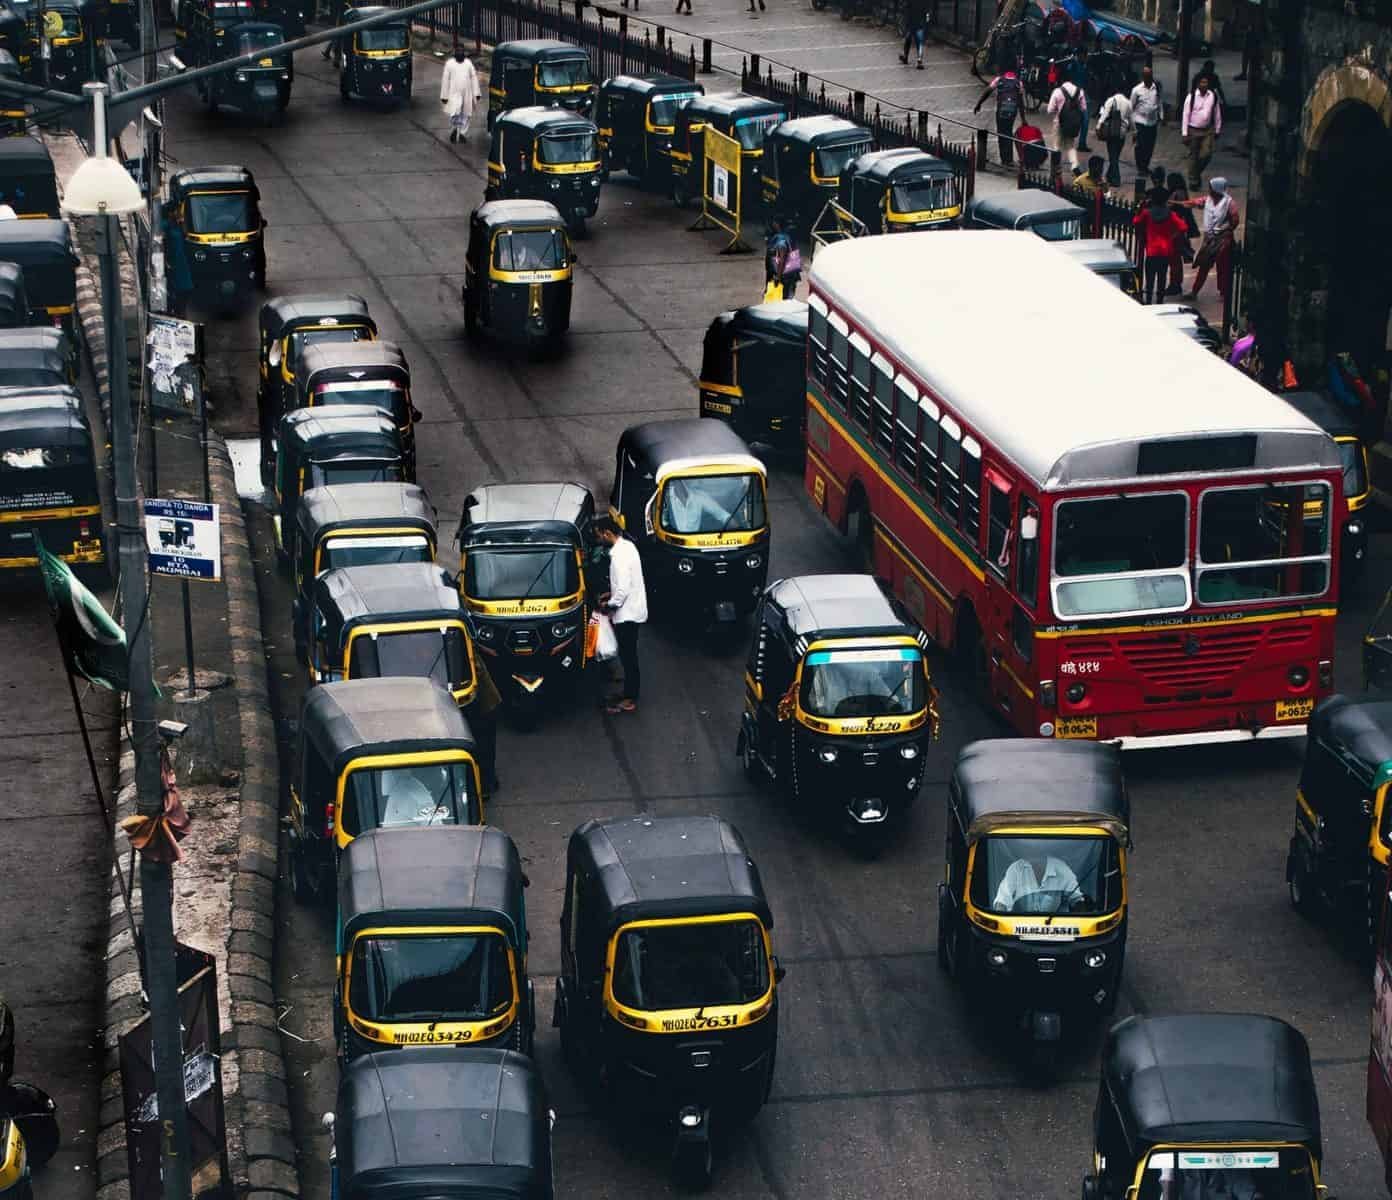 Mumbai tuk-tuks on street